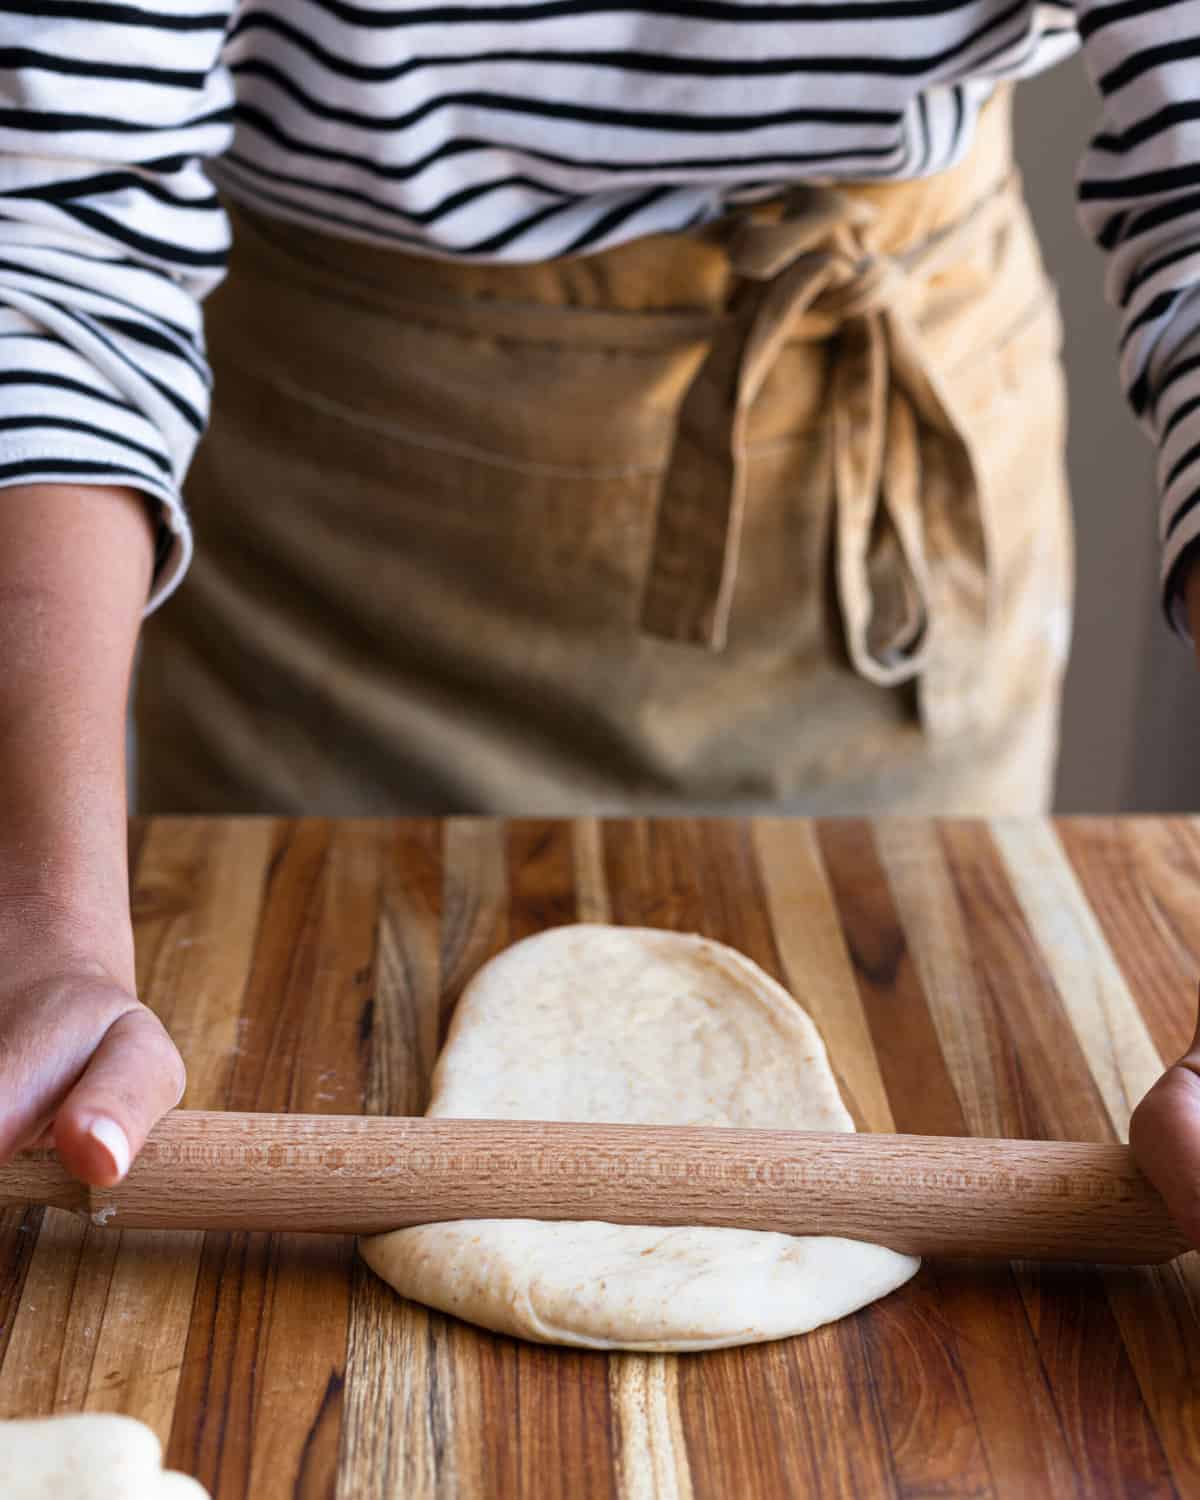 Flattening 1 portion of dough using a rolling pin